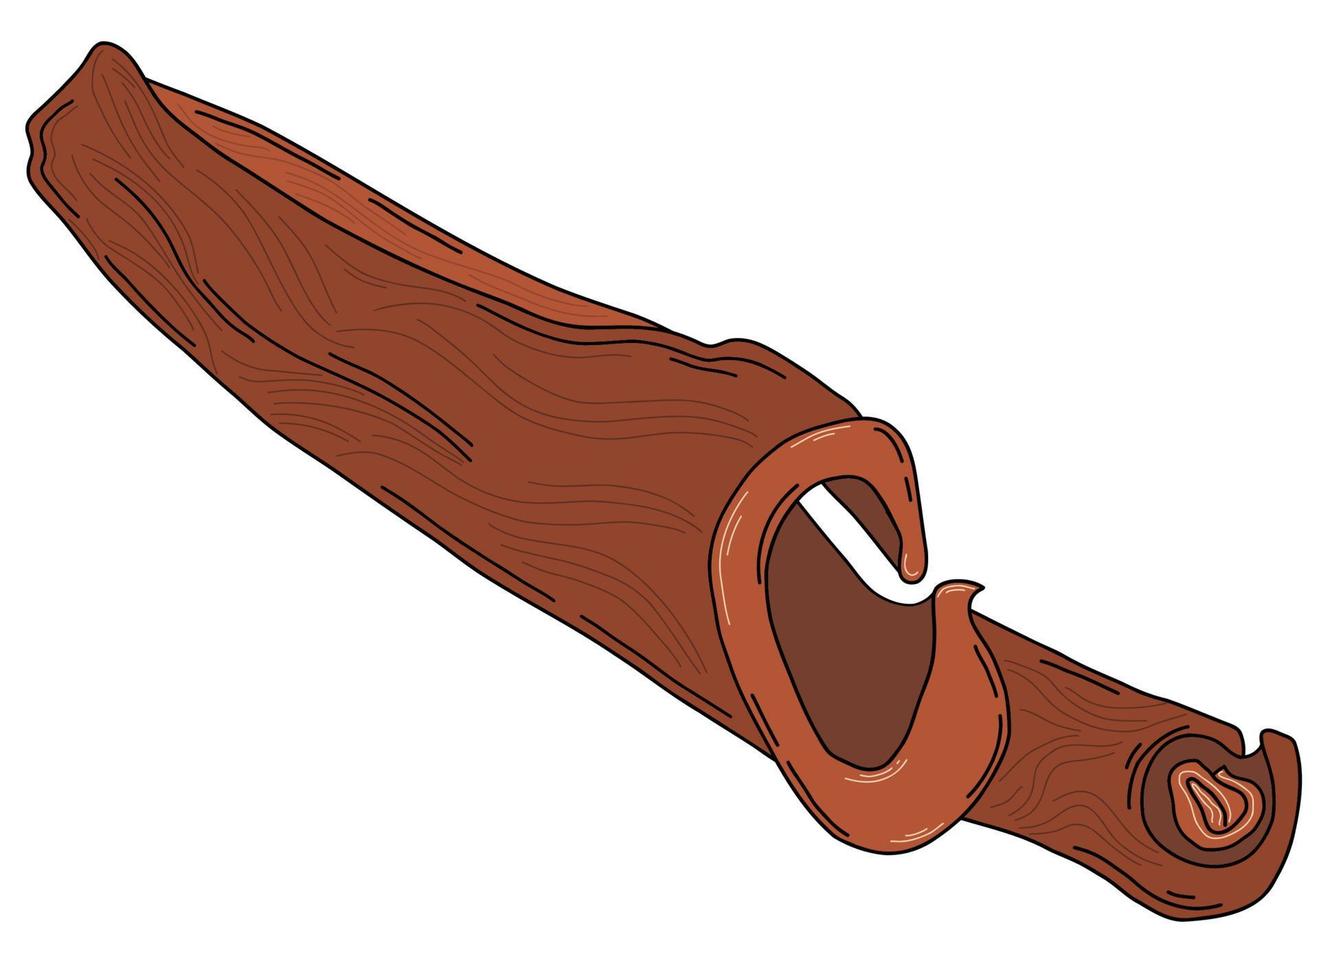 Spice. Cinnamon stick. Vector illustration